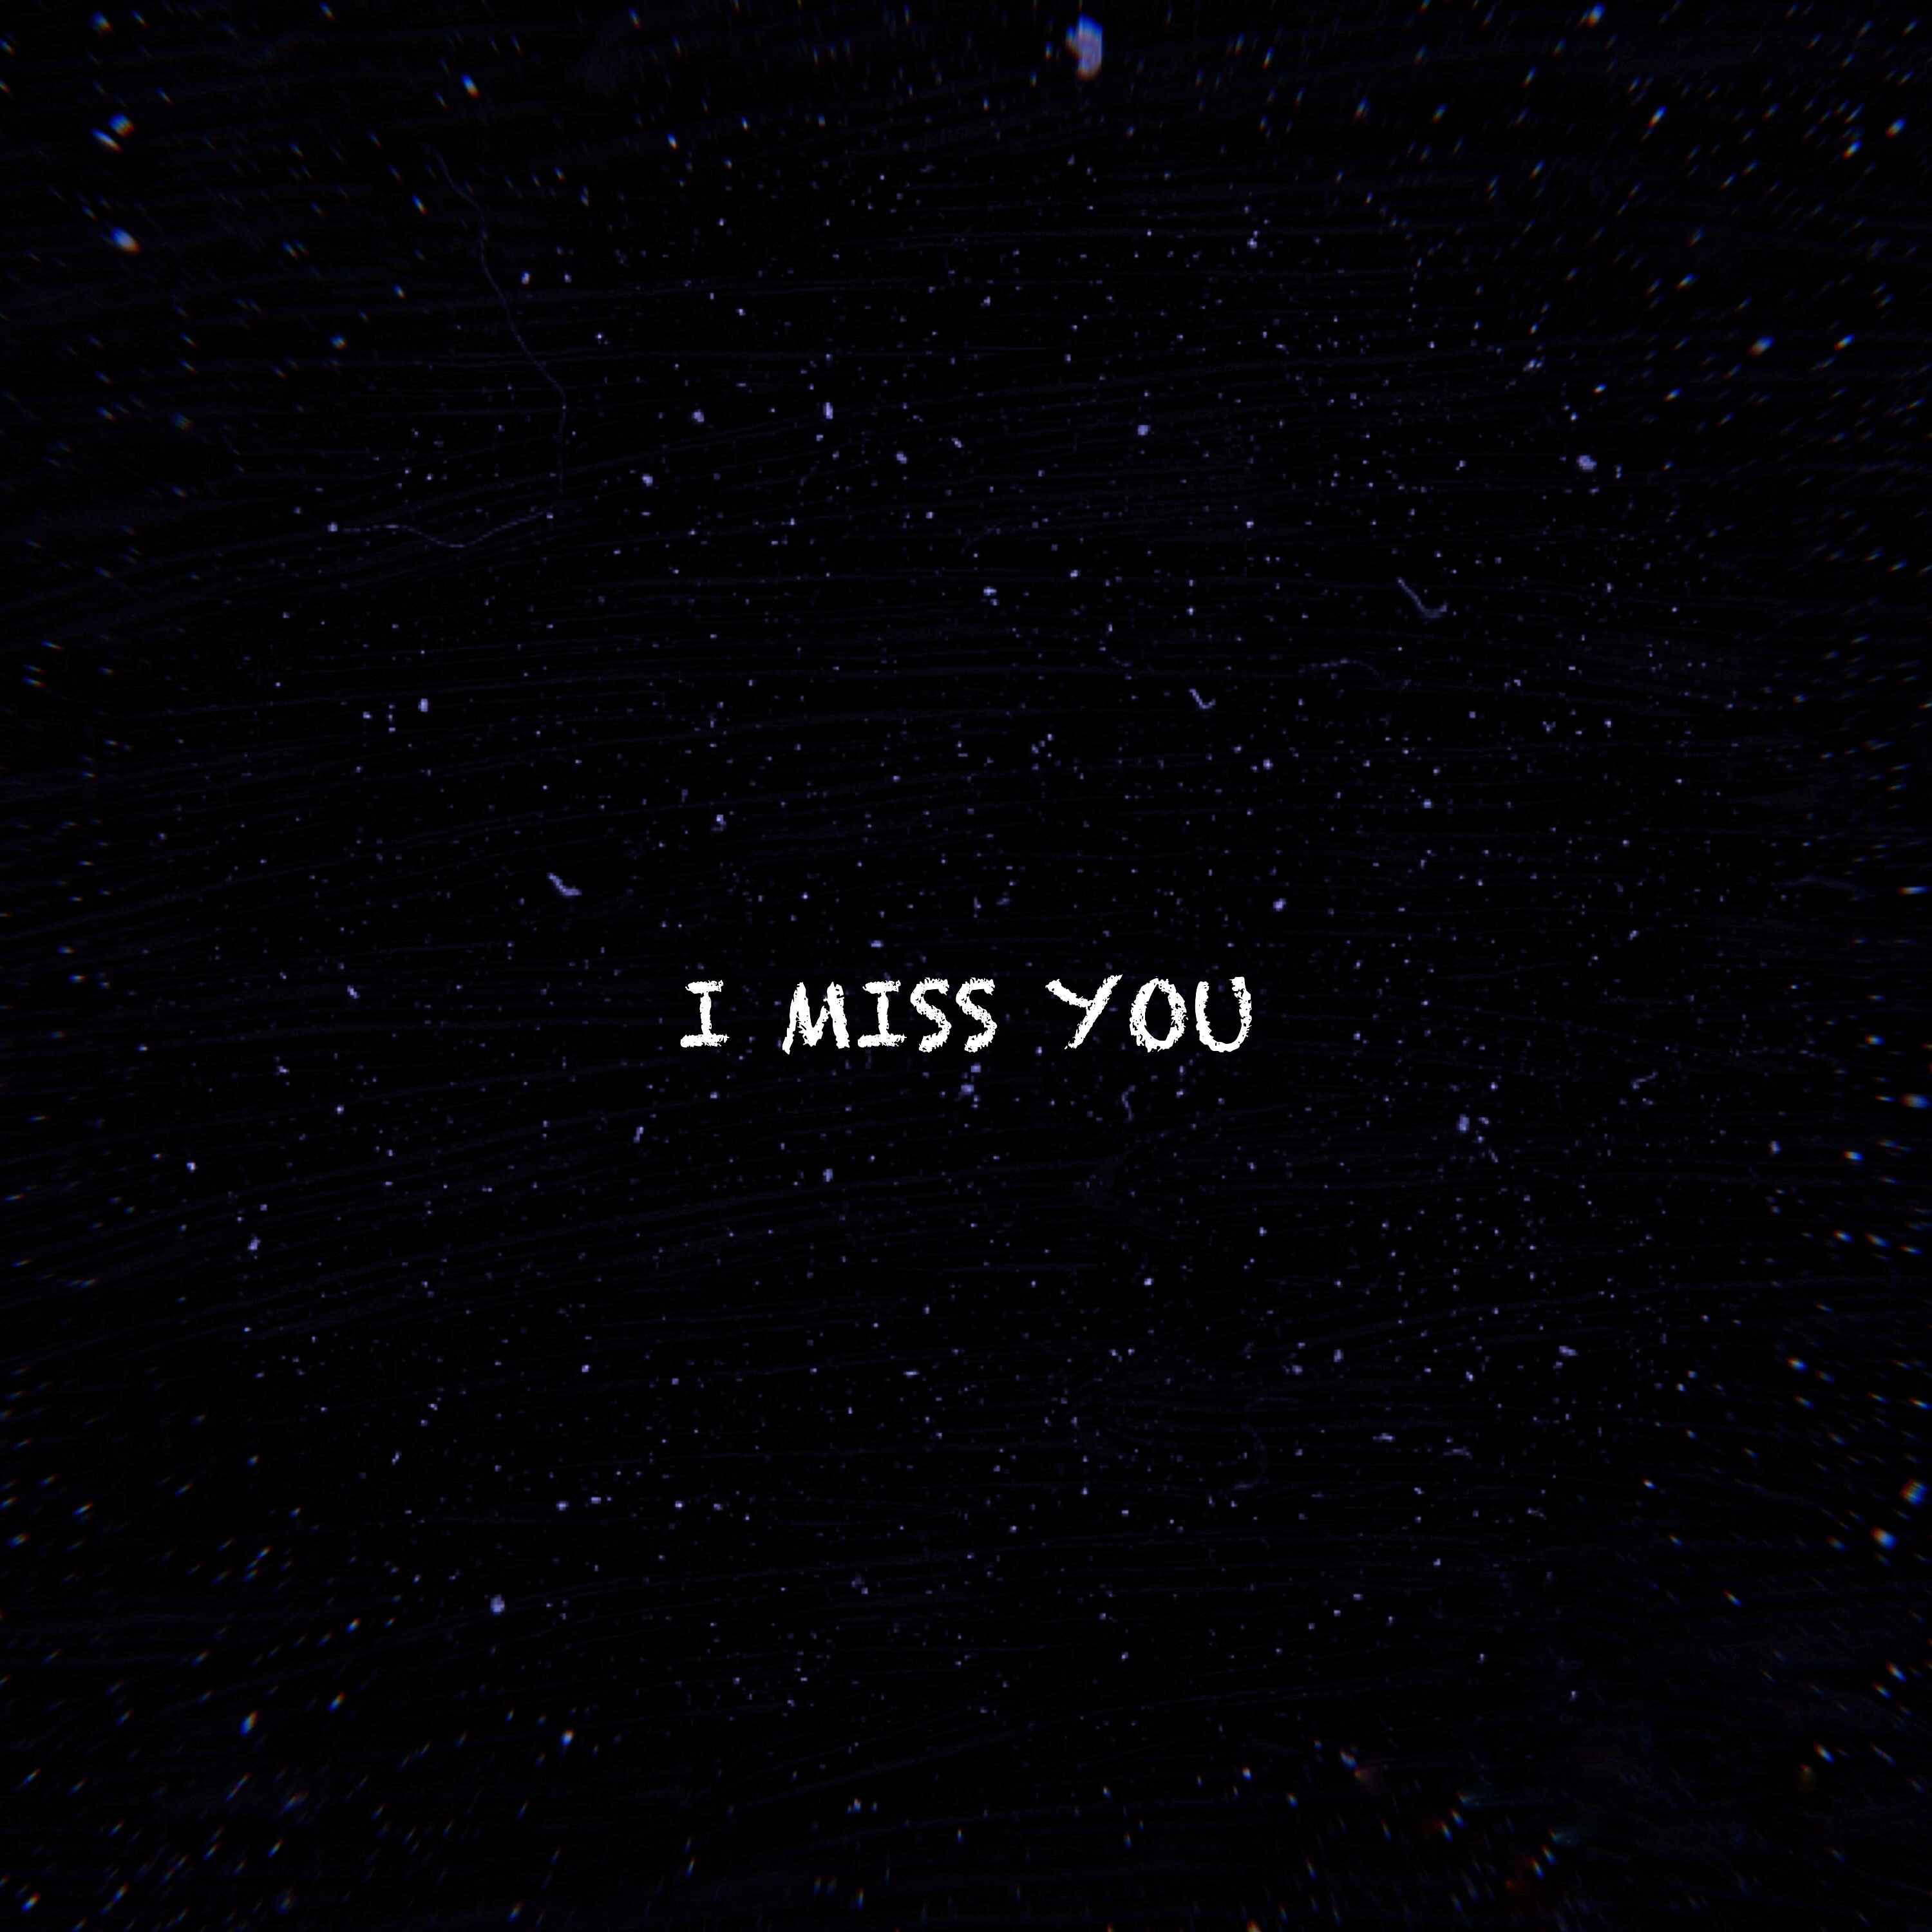 I am Miss you на чёрном фоне